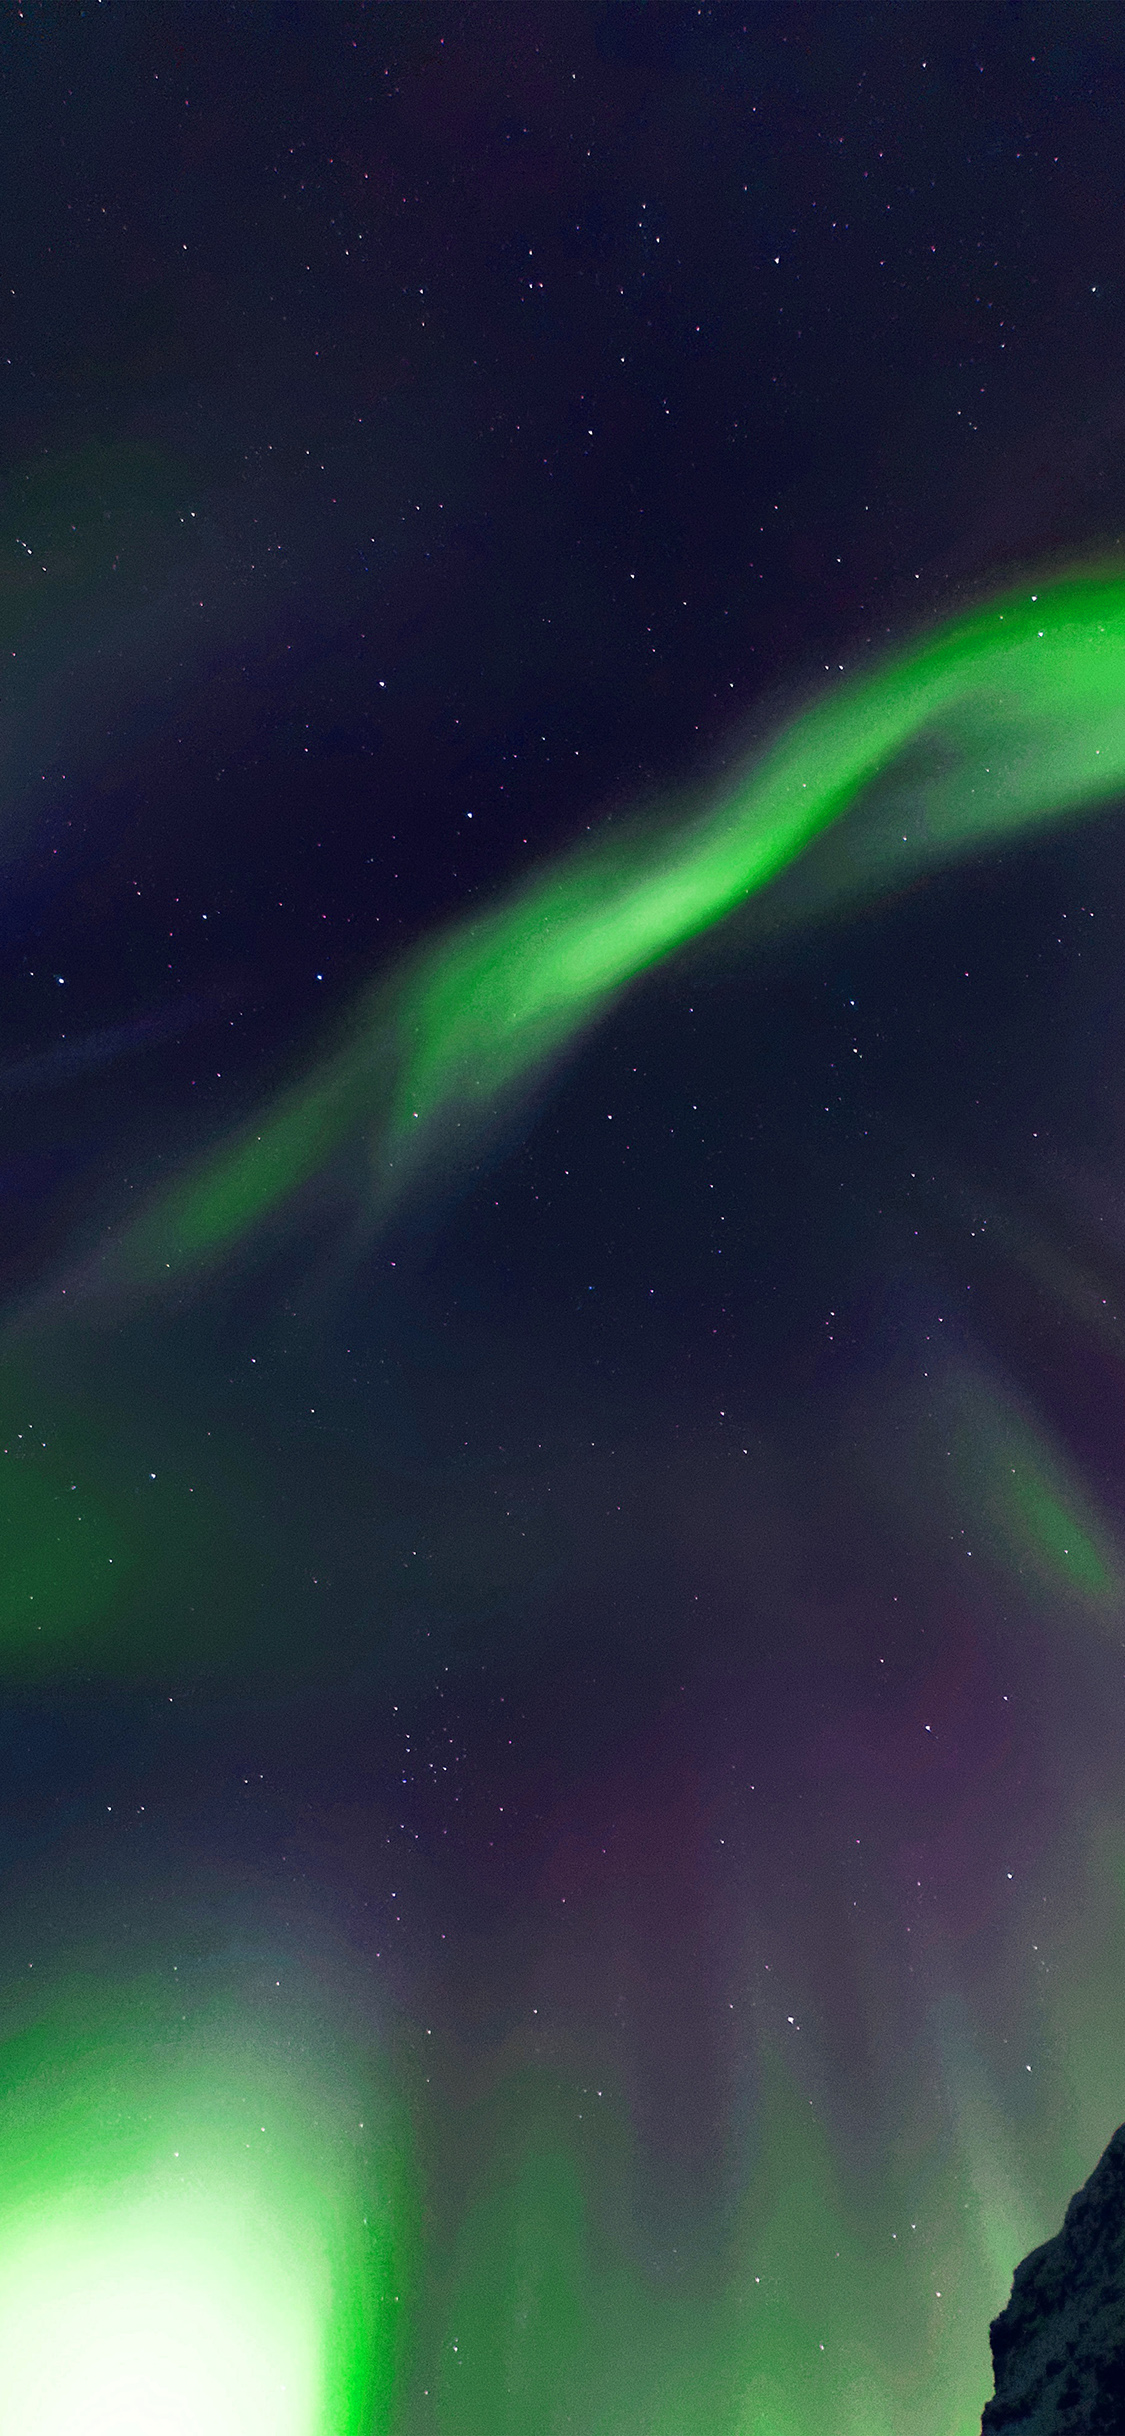 iPhone X wallpaper. aurora sky night star green nature green